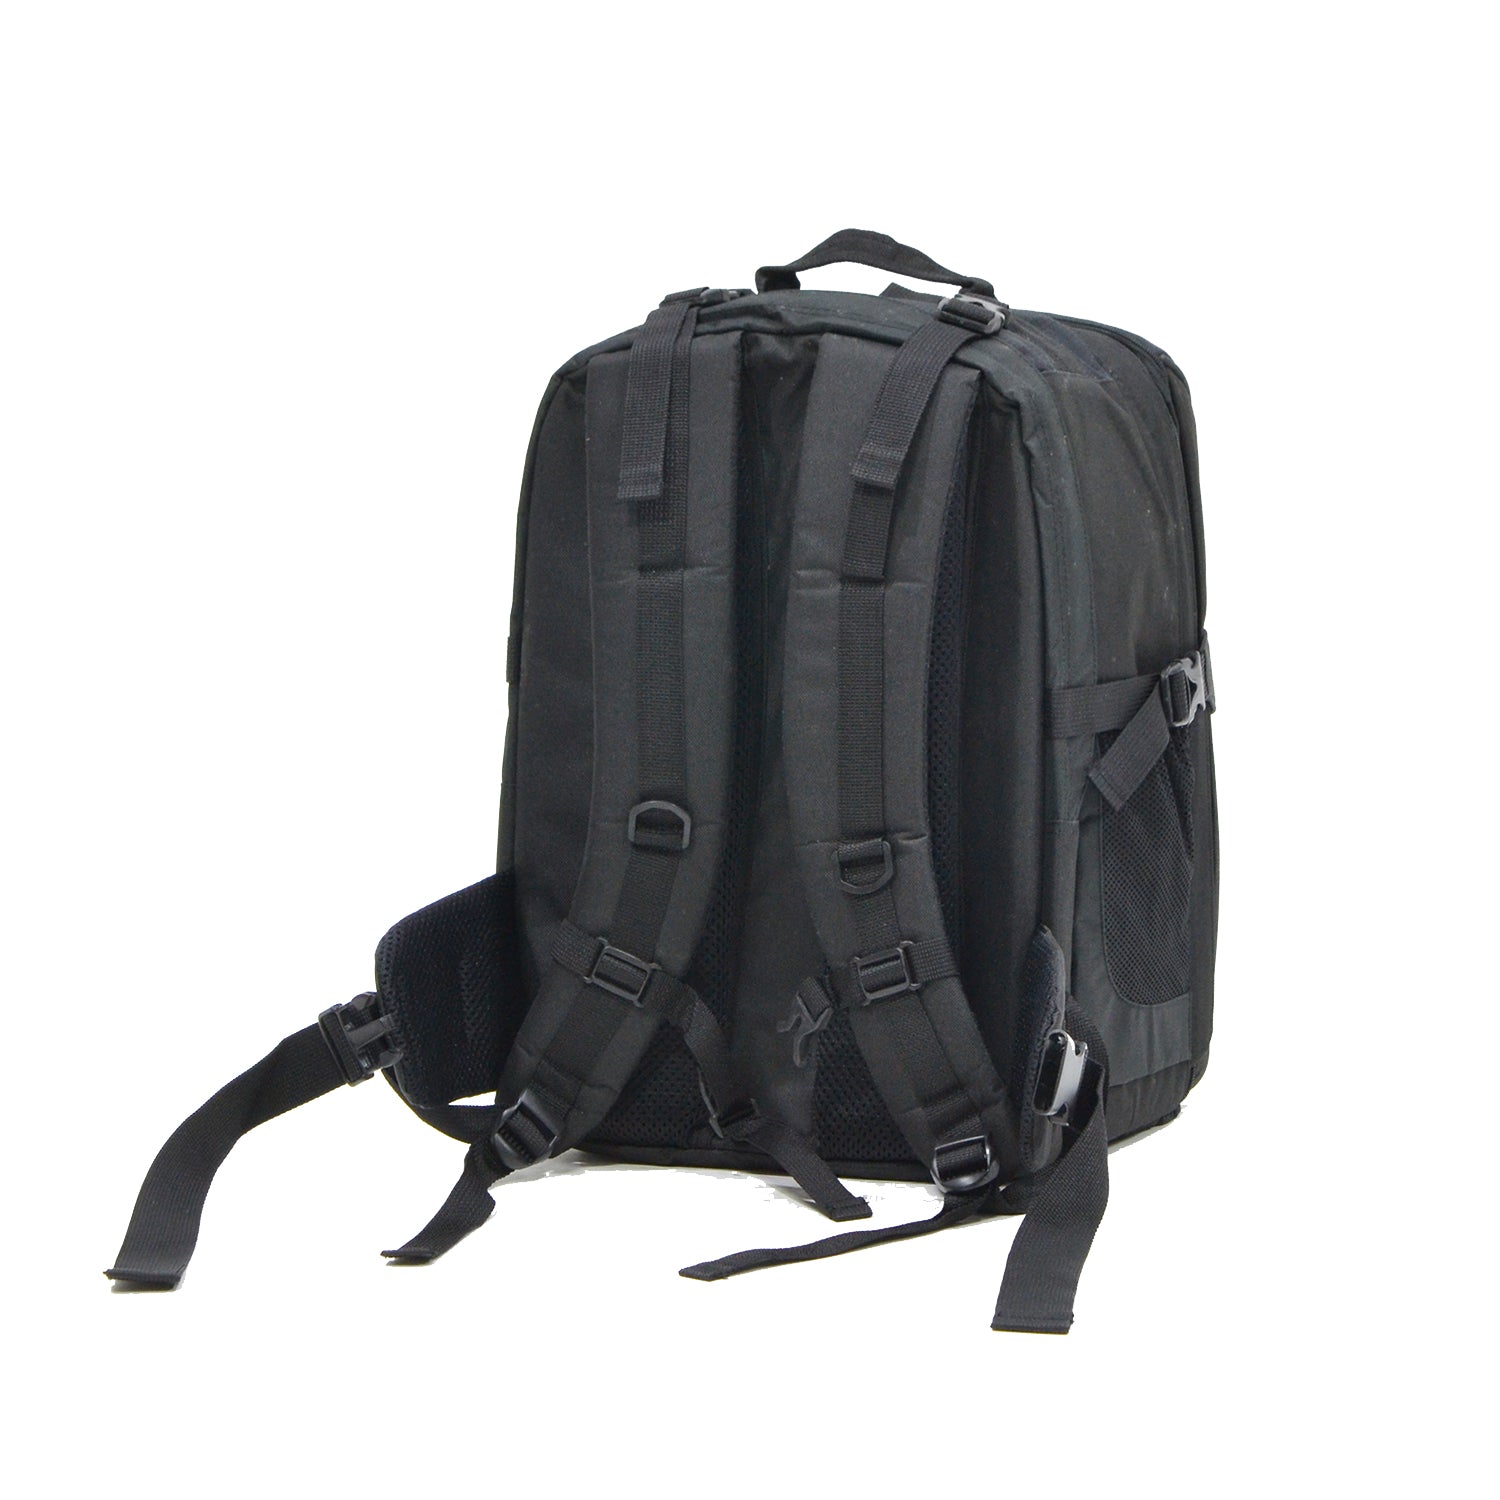 Pixel B-01 Camera Backpack